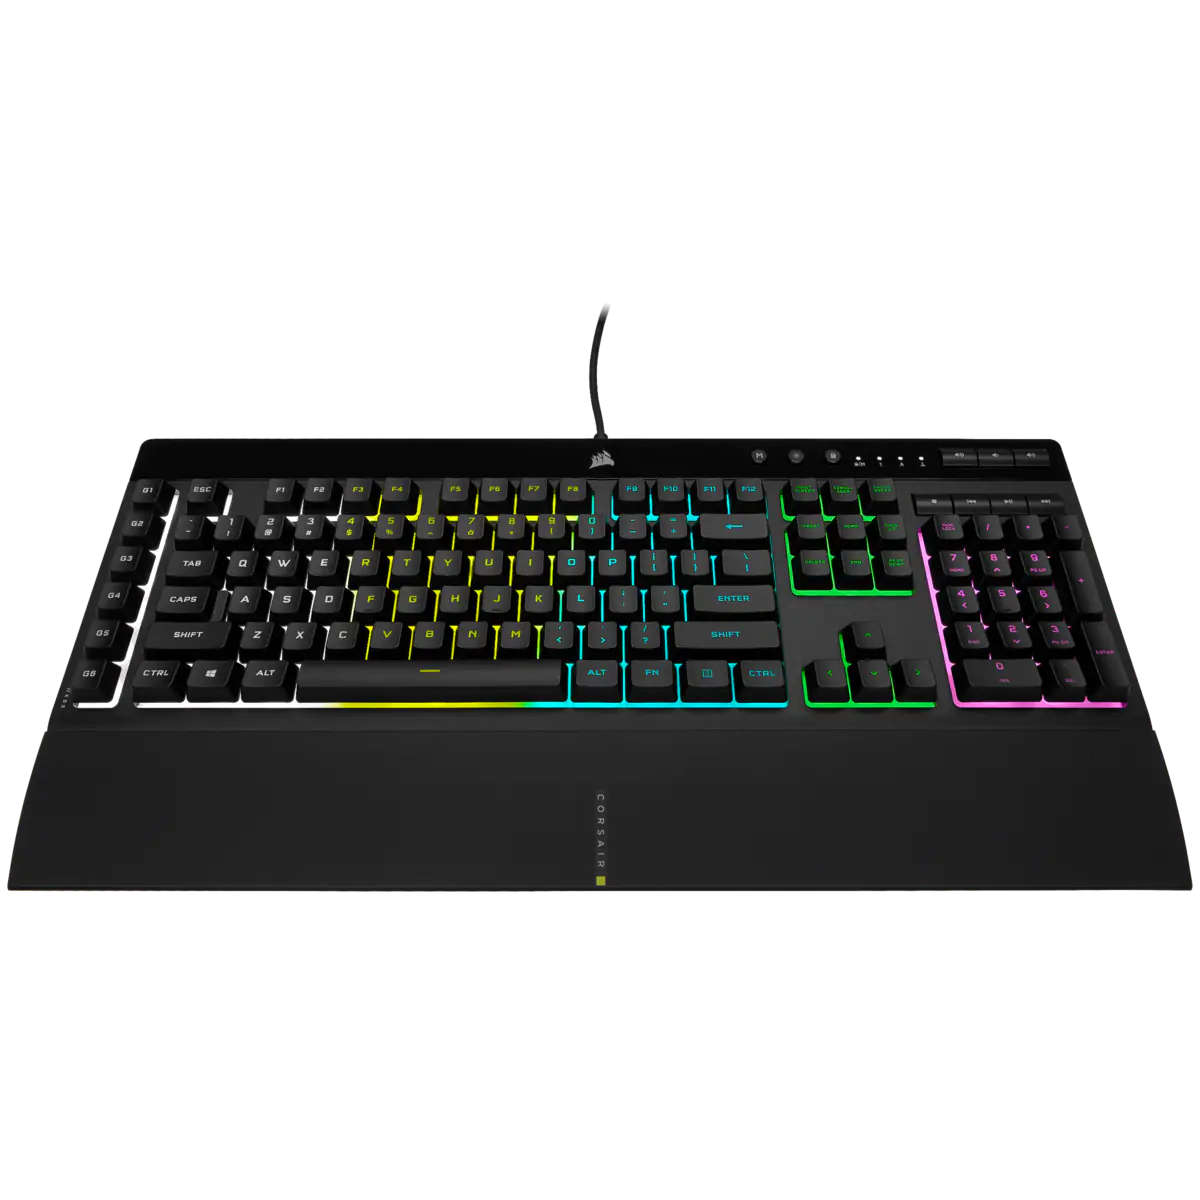 Corsair K55 RGB PRO Gaming Keyboard, 5 Zone backlighting. OB Accessories 7